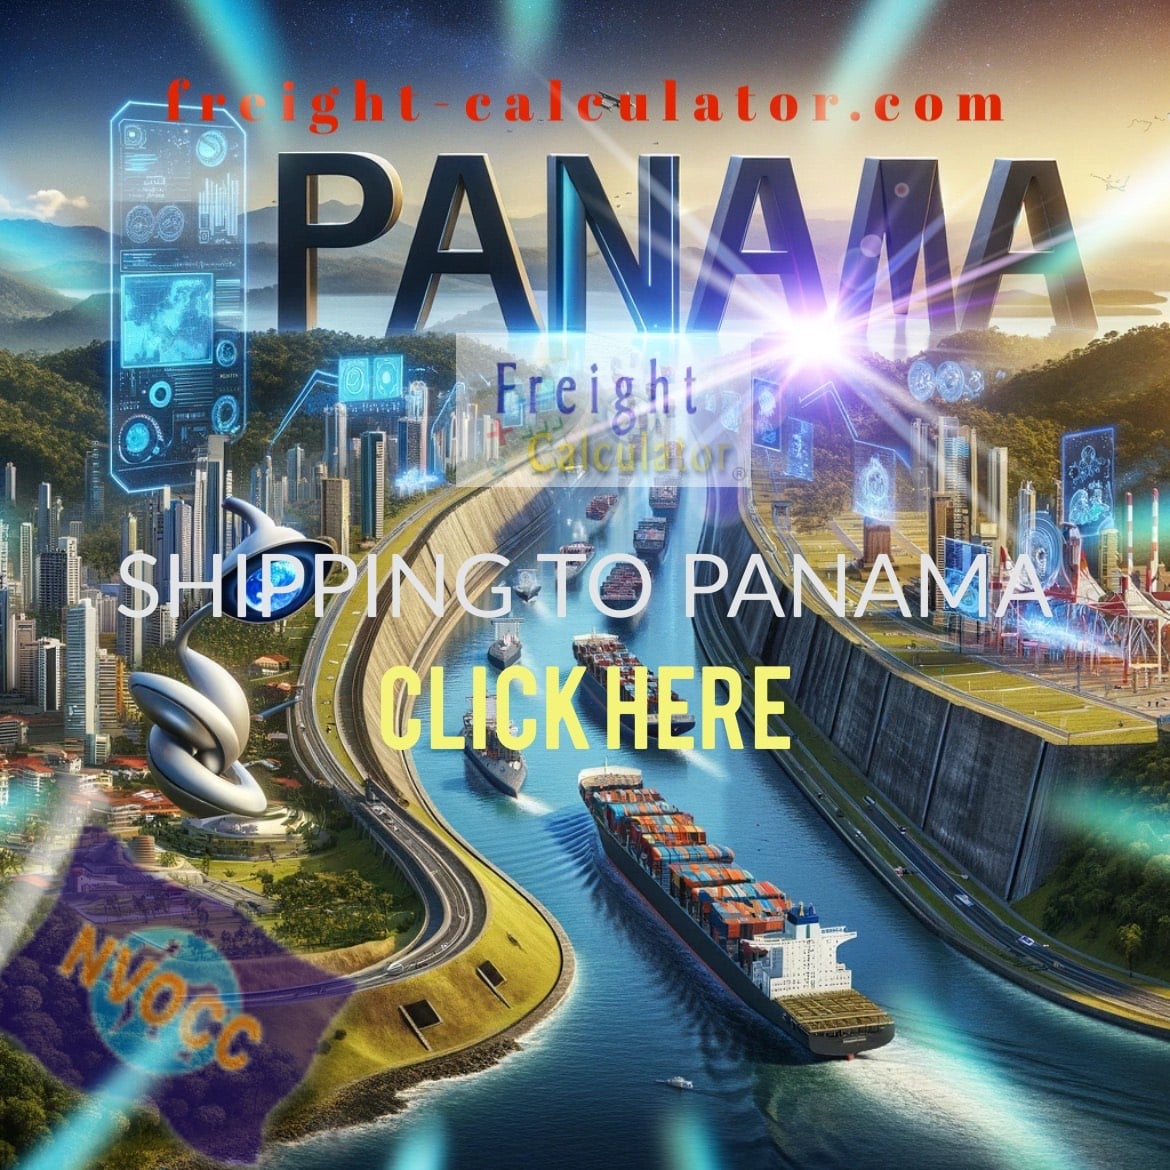 Shipping to Panama